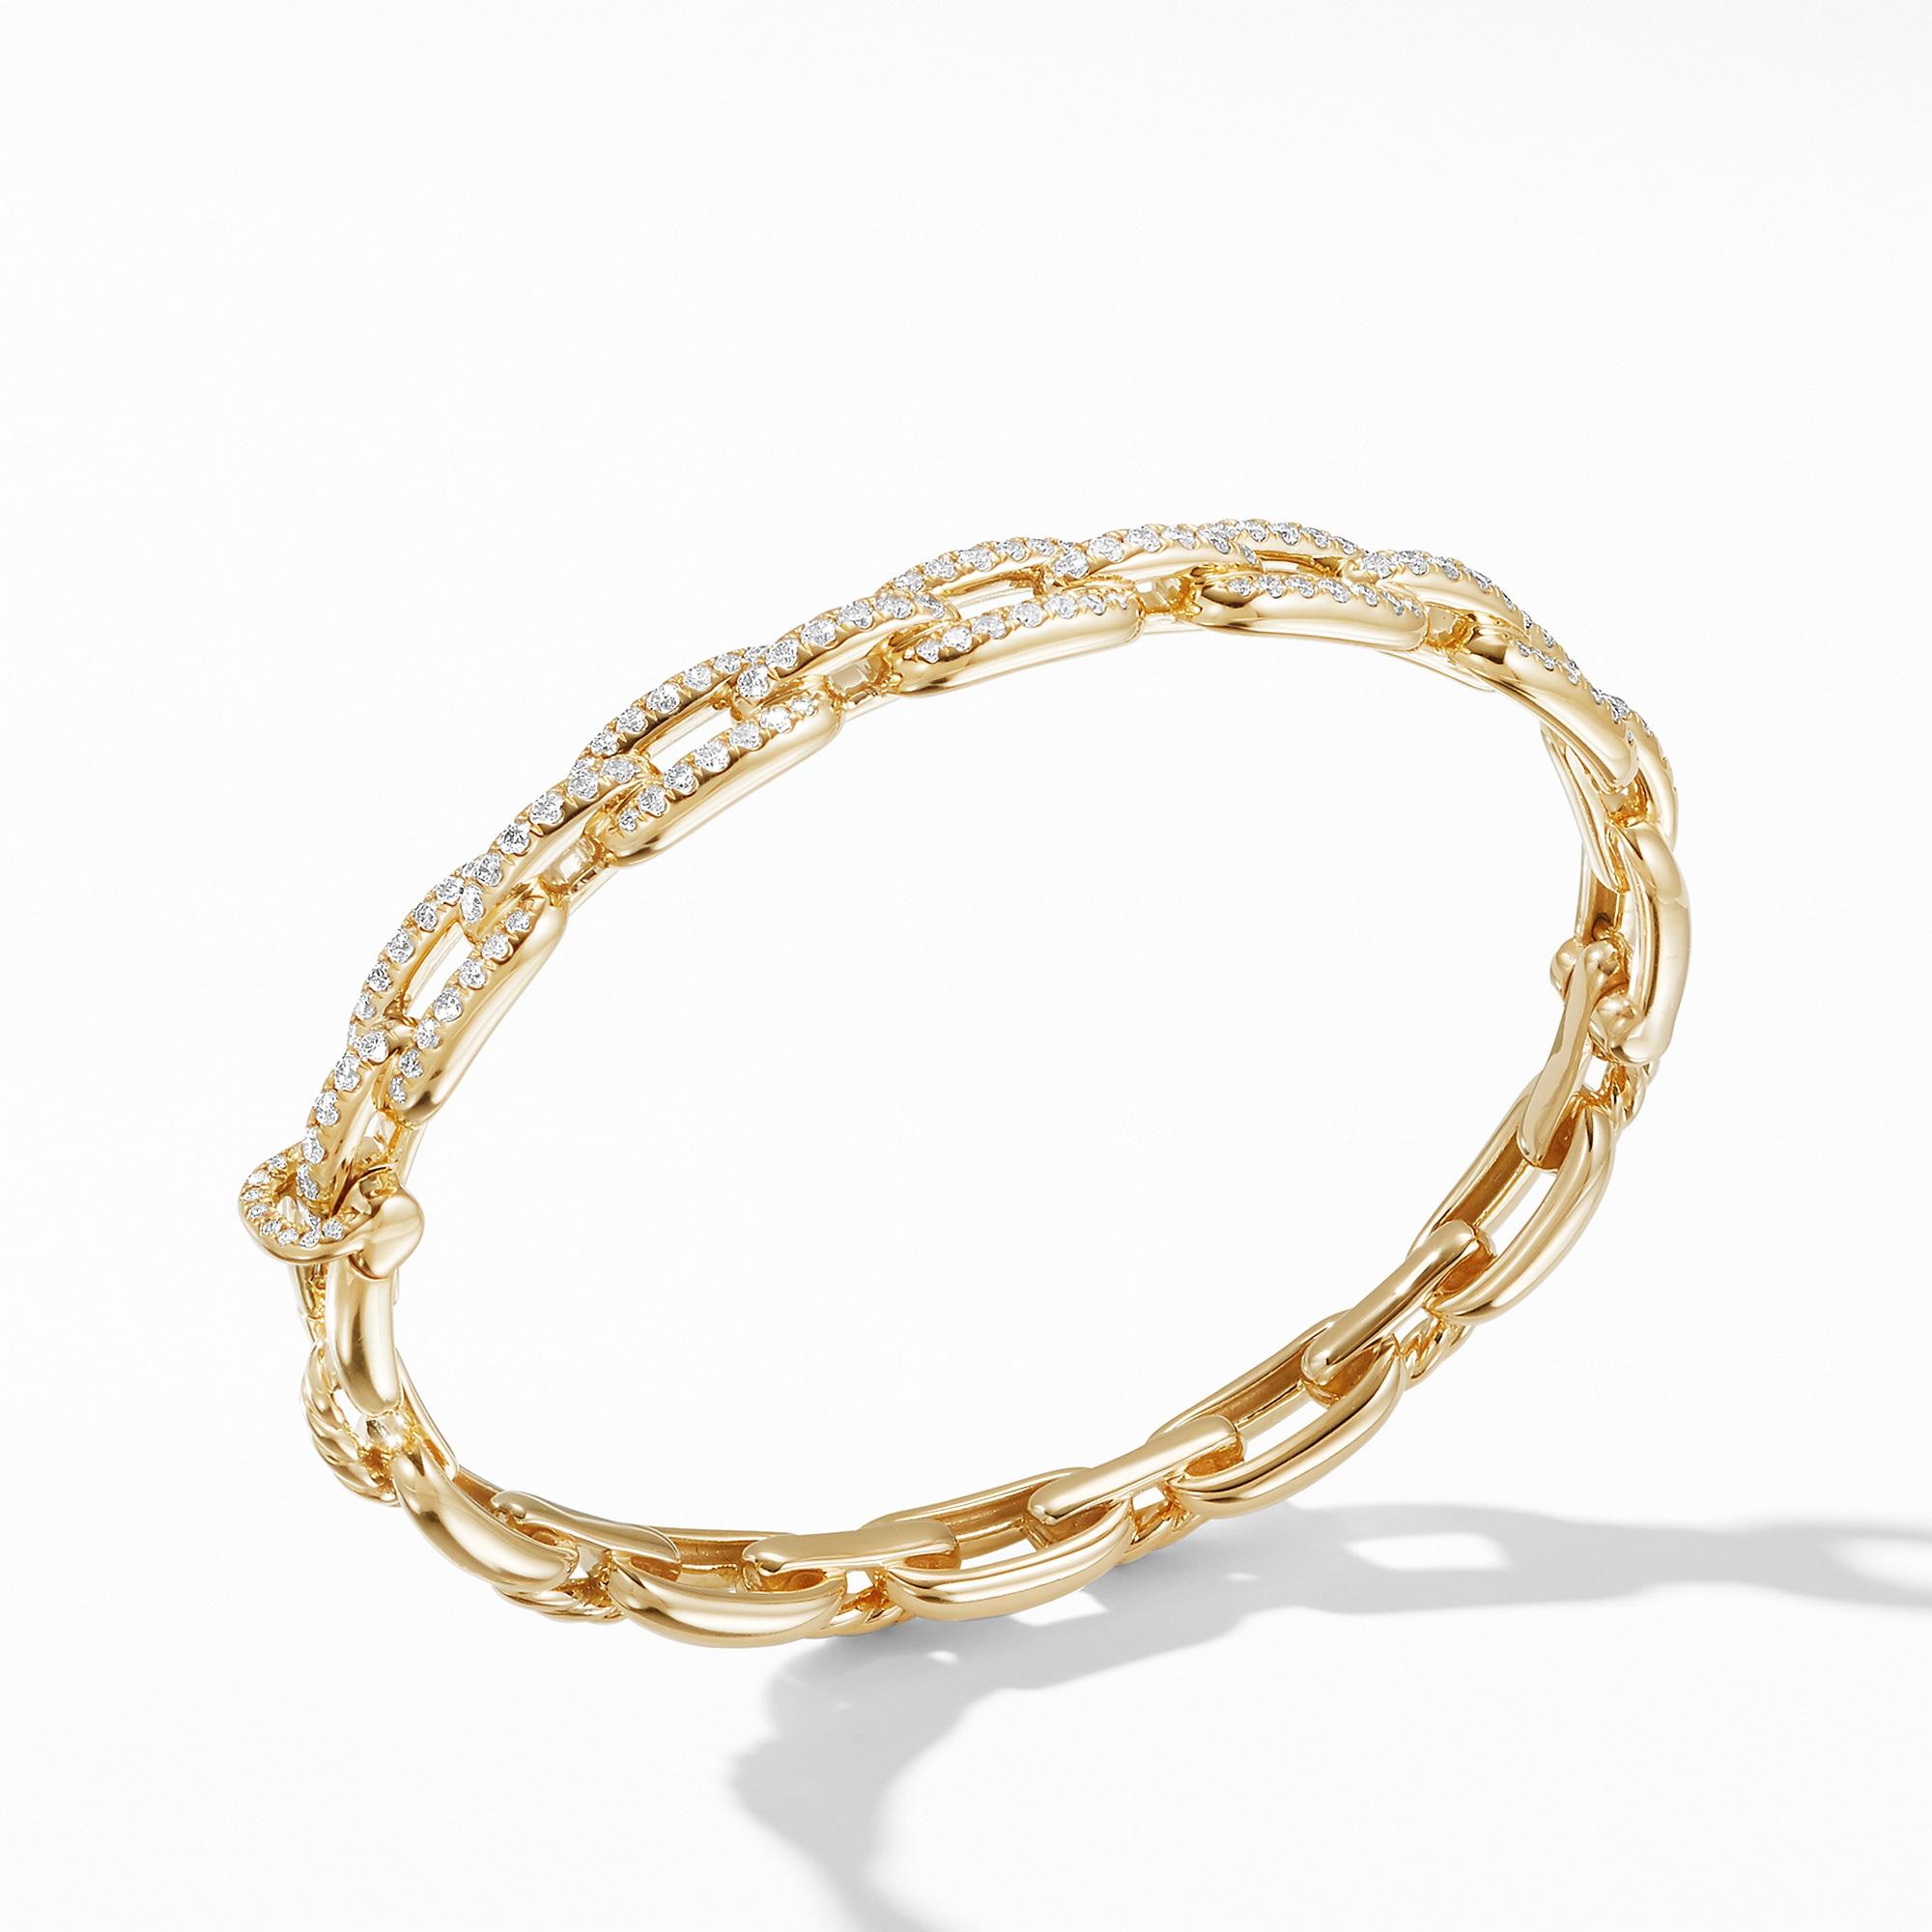 David Yurman Stax 7mm Chain Link Bracelet with Diamonds in 18k Gold